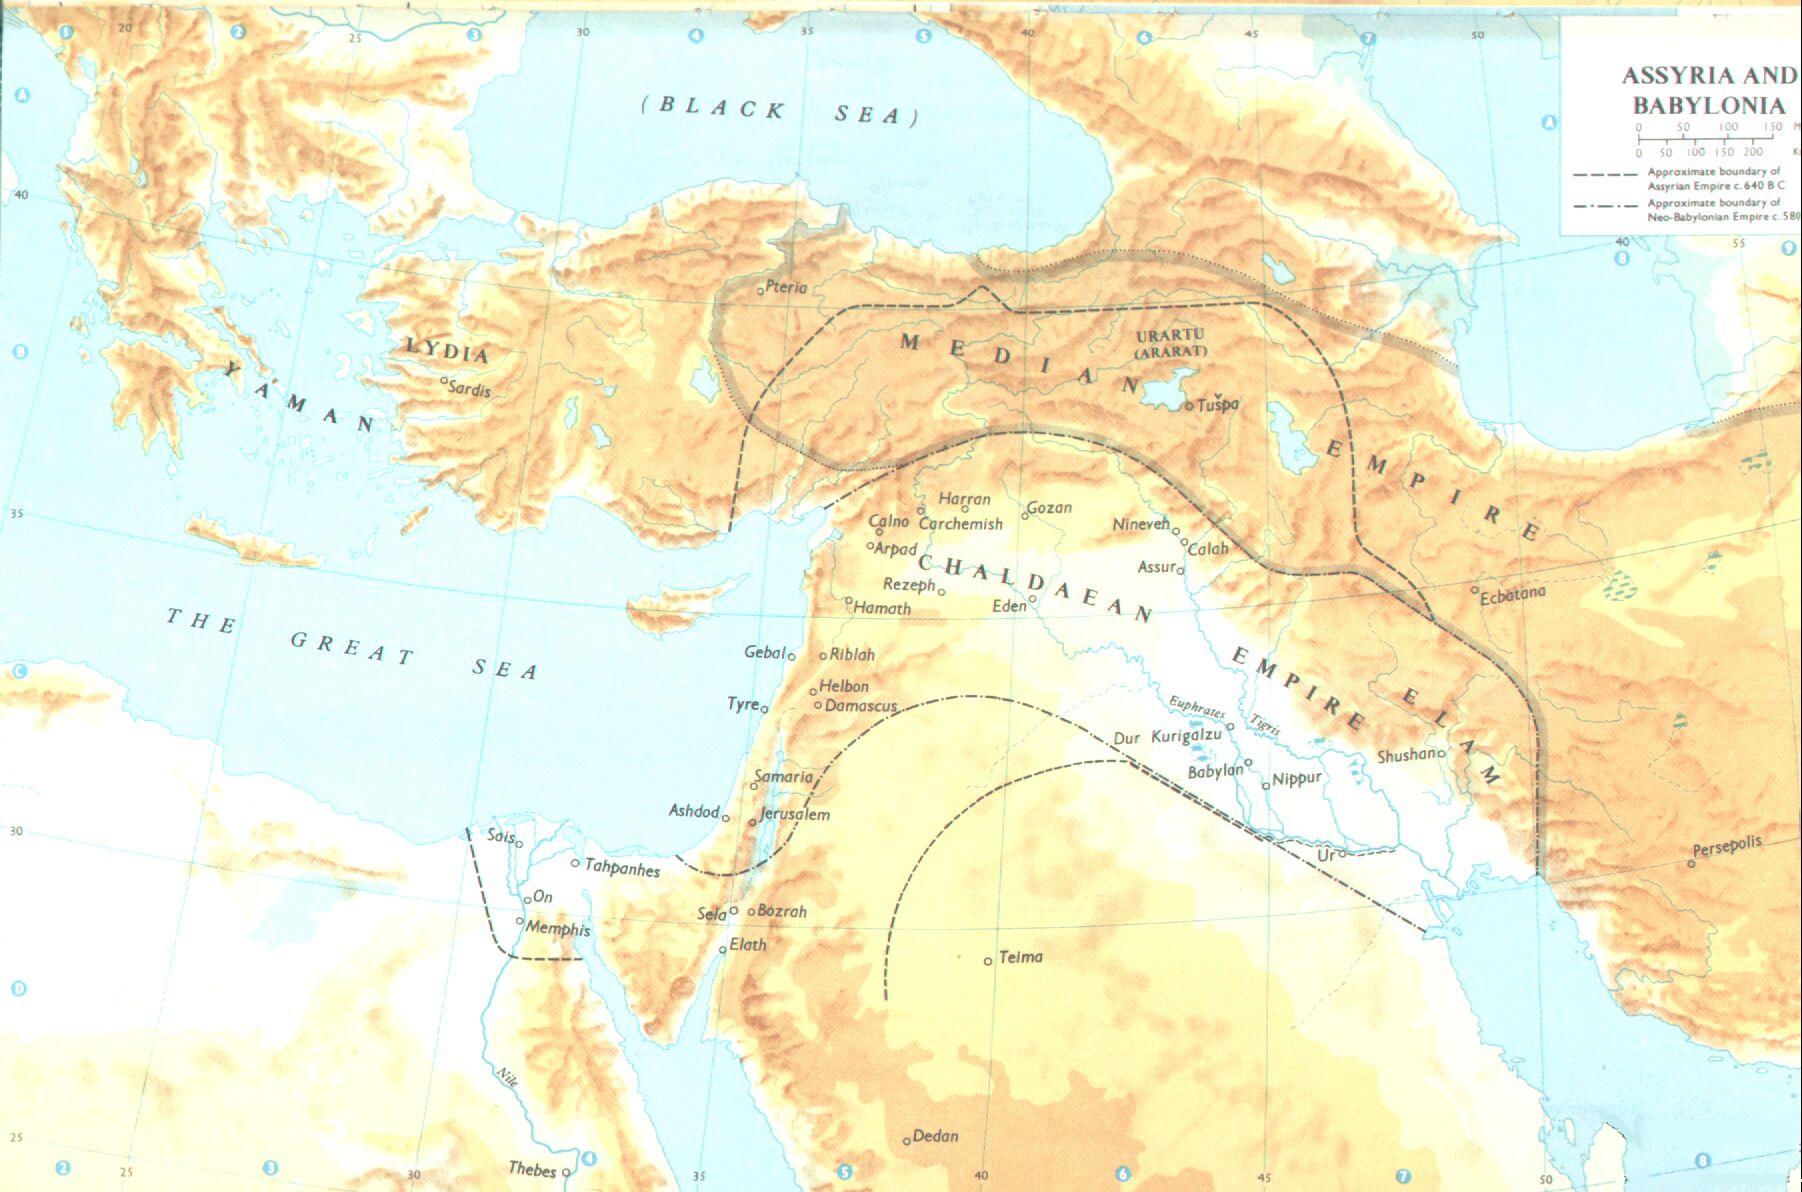 Assyria and Babylonia